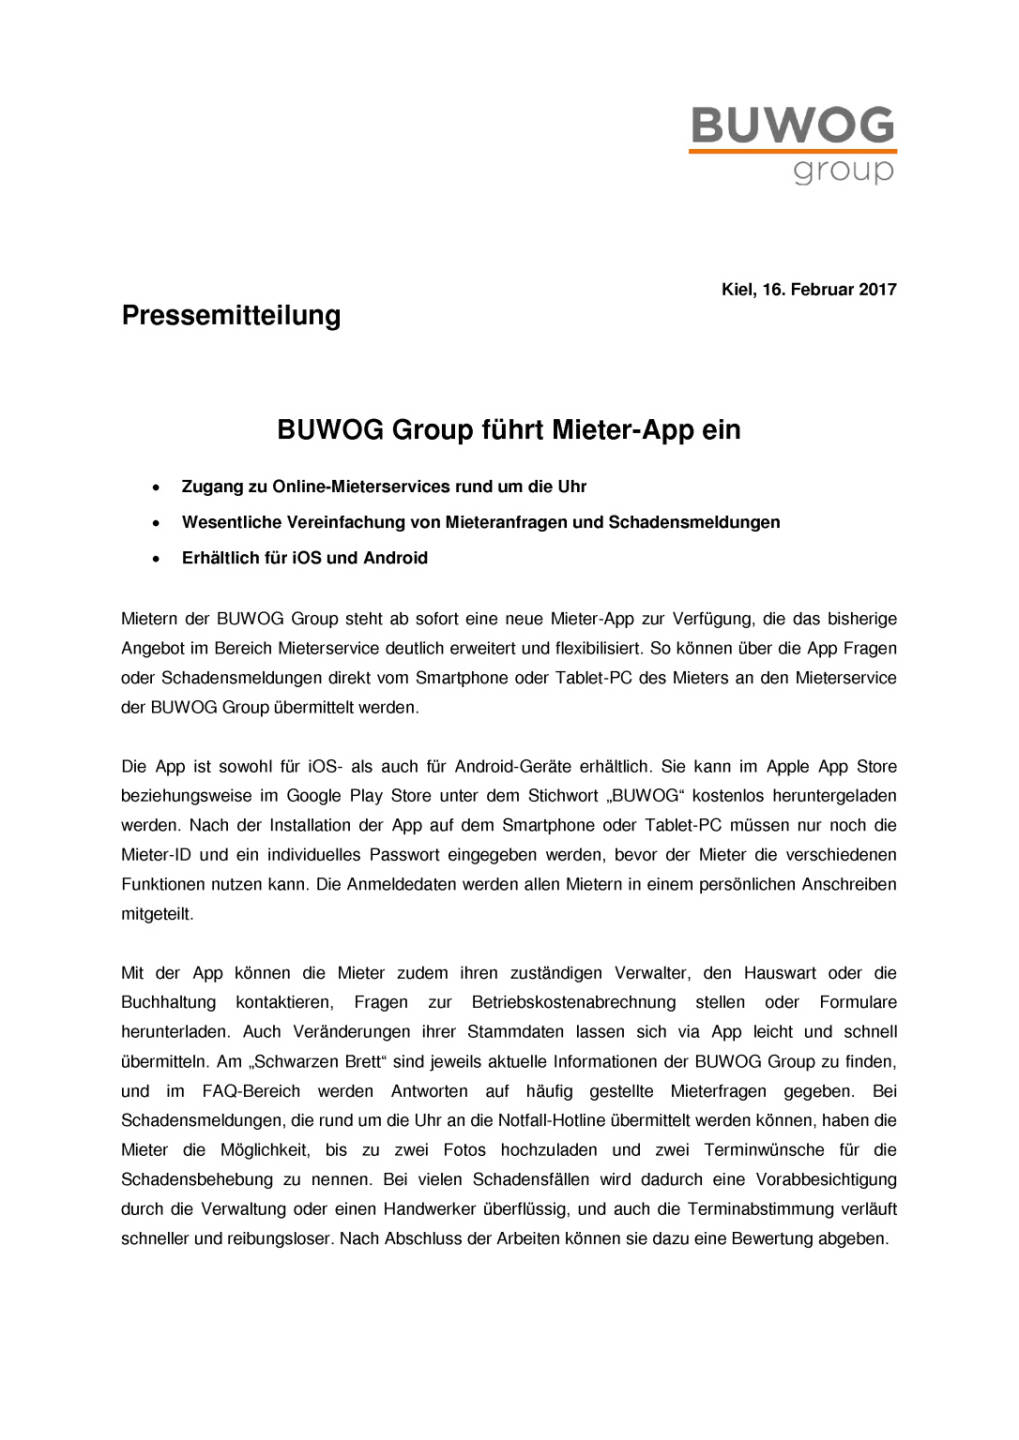 Buwog Group führt Mieter-App ein, Seite 1/2, komplettes Dokument unter http://boerse-social.com/static/uploads/file_2116_buwog_group_fuhrt_mieter-app_ein.pdf